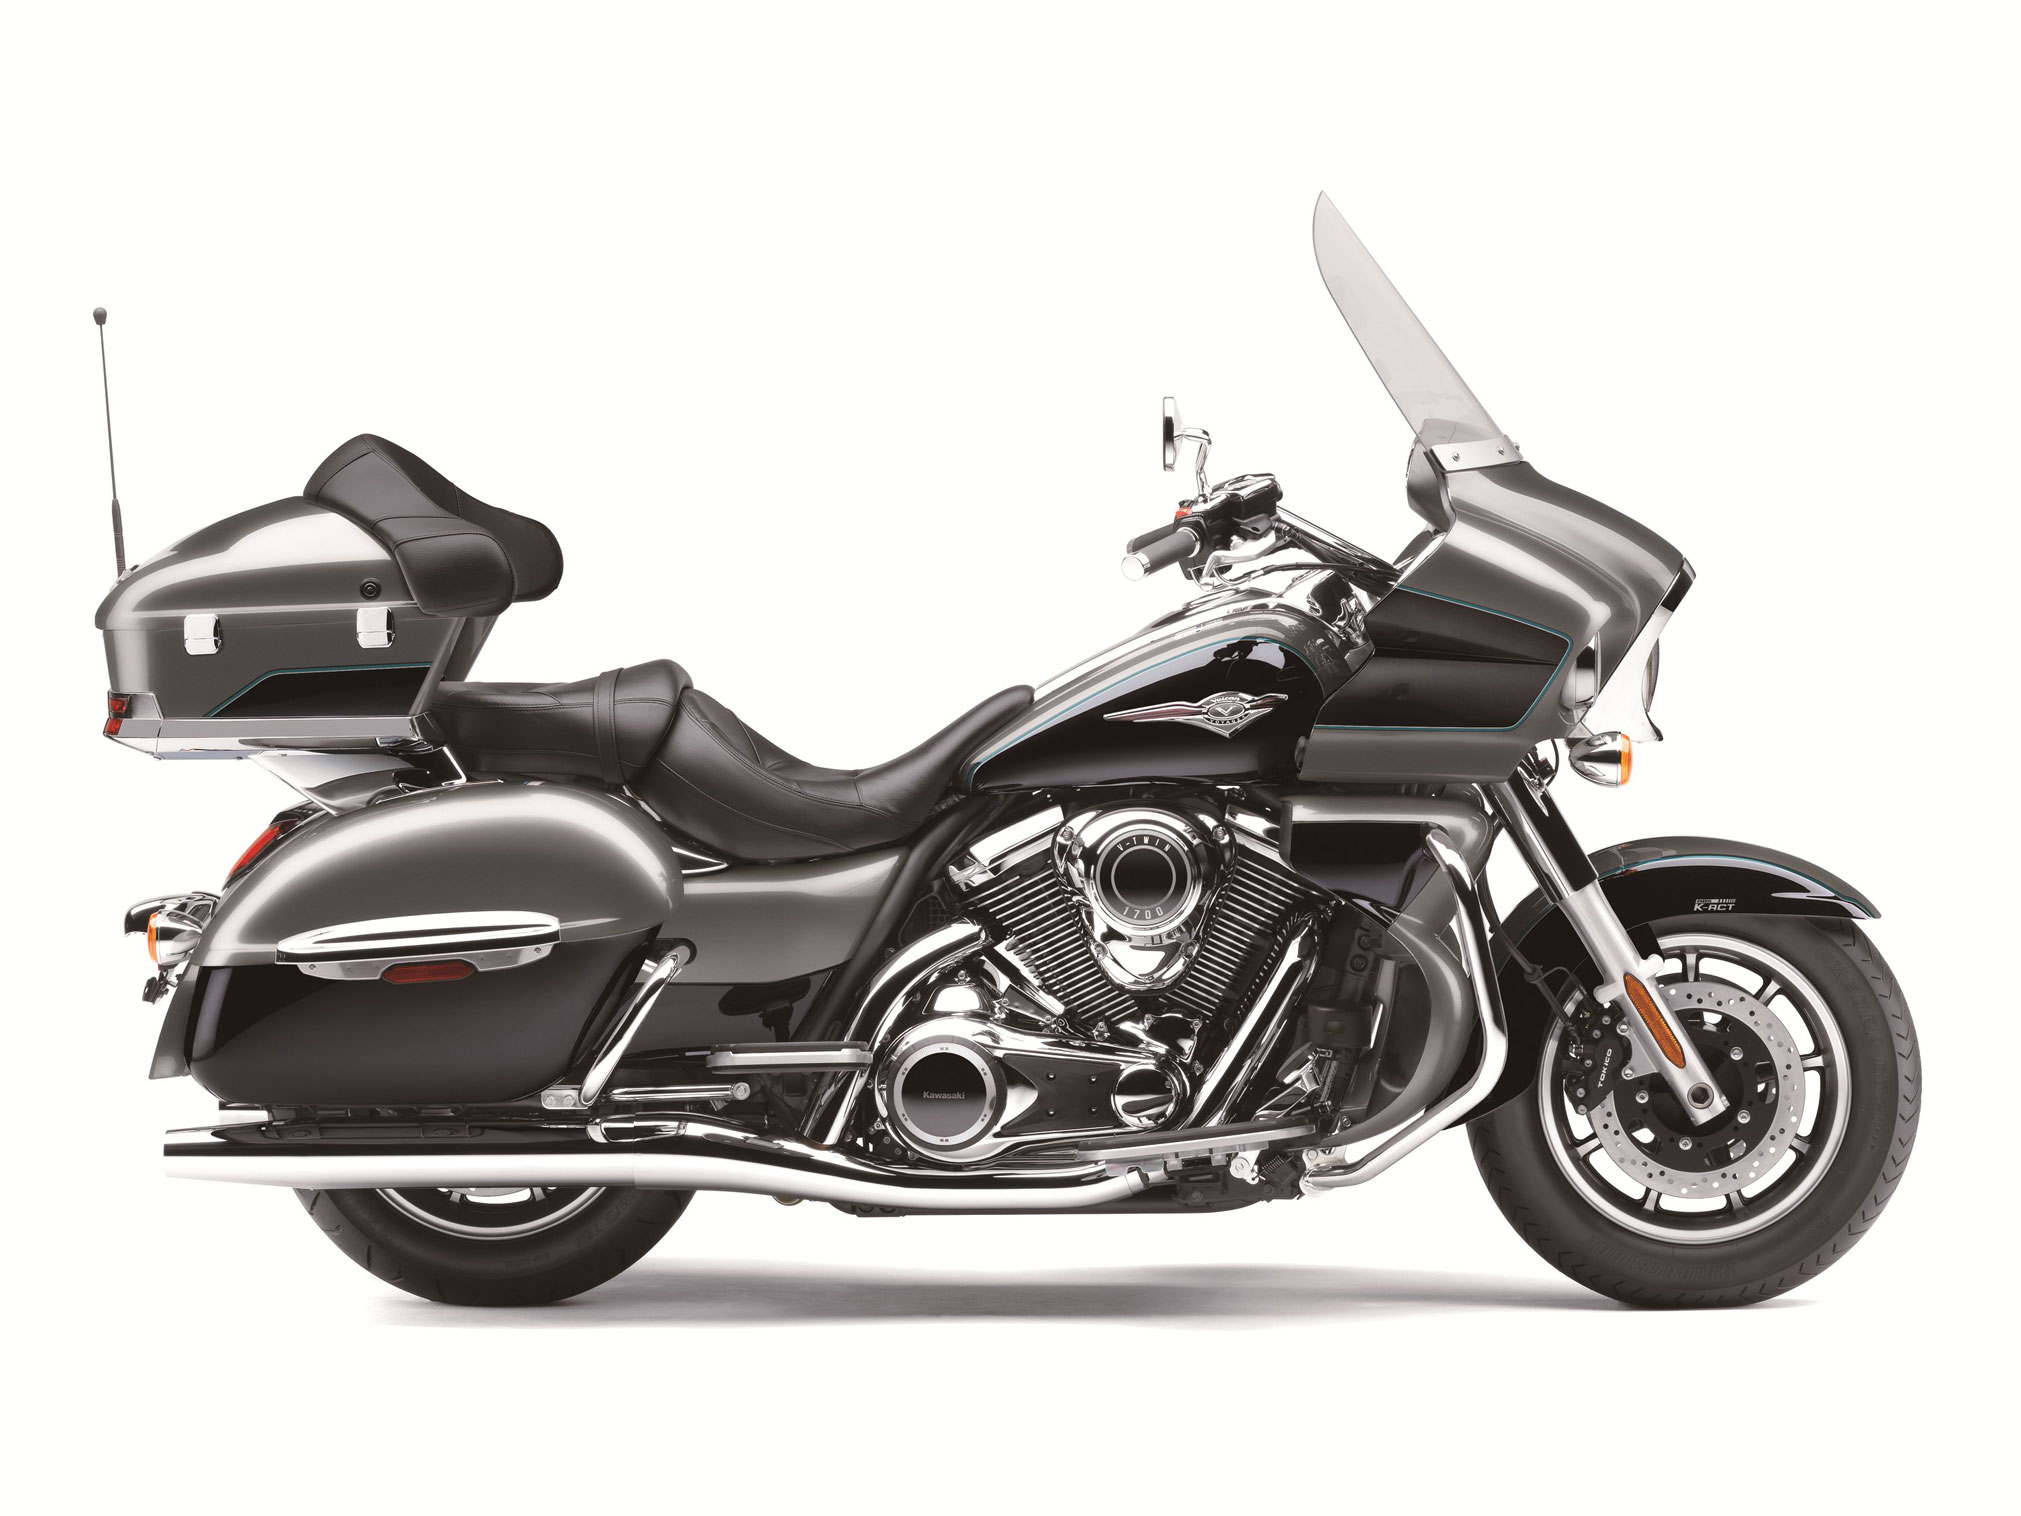 2021 Kawasaki Vulcan 1700 Voyager ABS Guide • Total Motorcycle